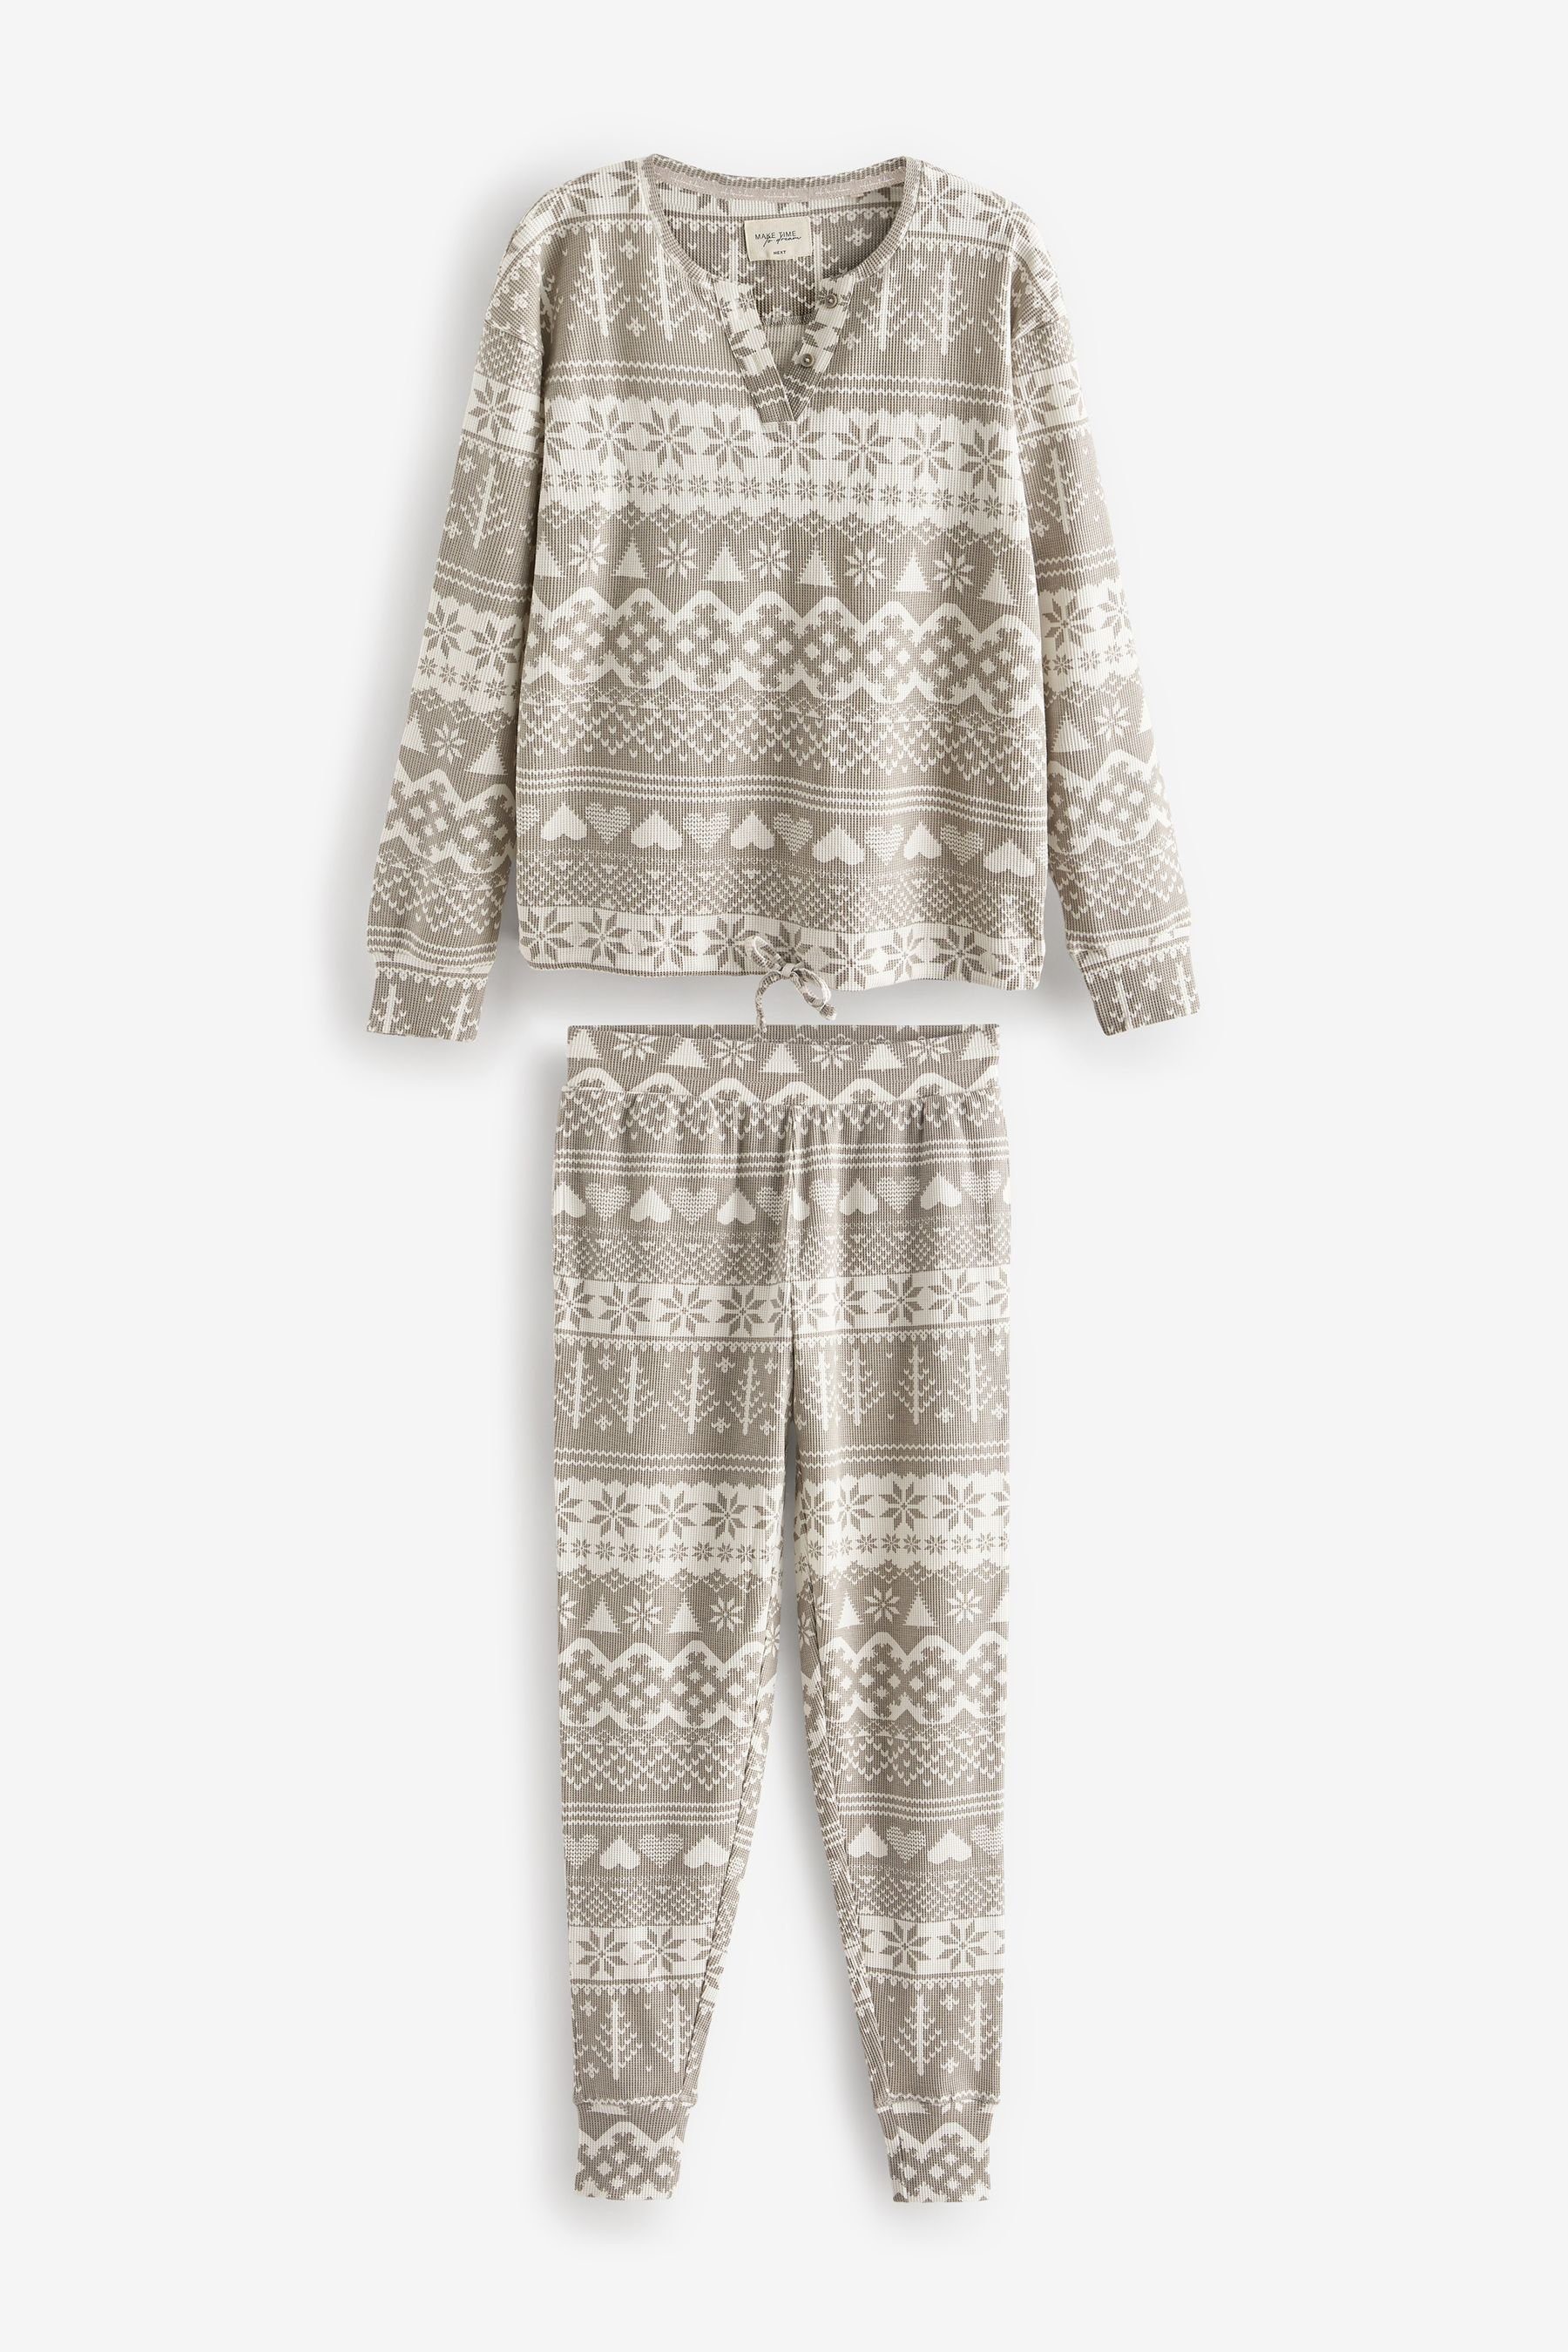 Next Pyjama Langärmeliger Fairisle Pattern Pyjama aus tlg) gewaffelter Grey Baumwolle (2